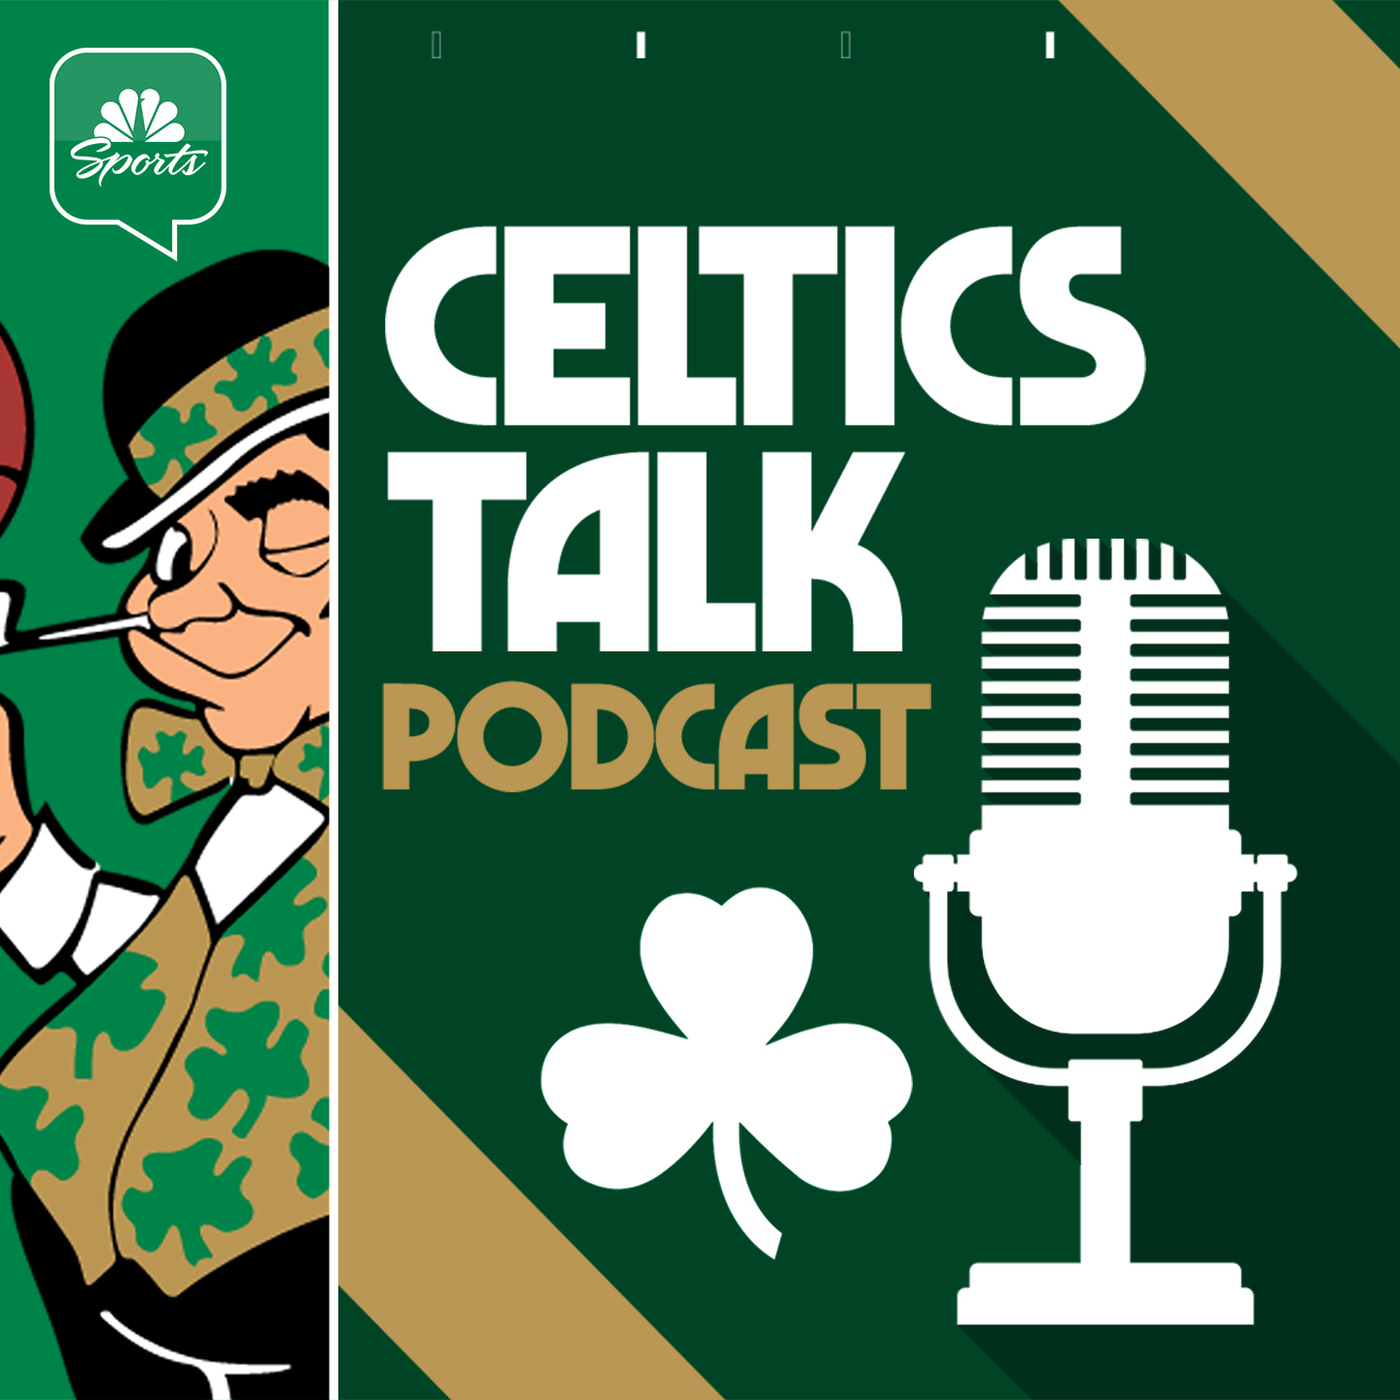 Celtics Talk podcast